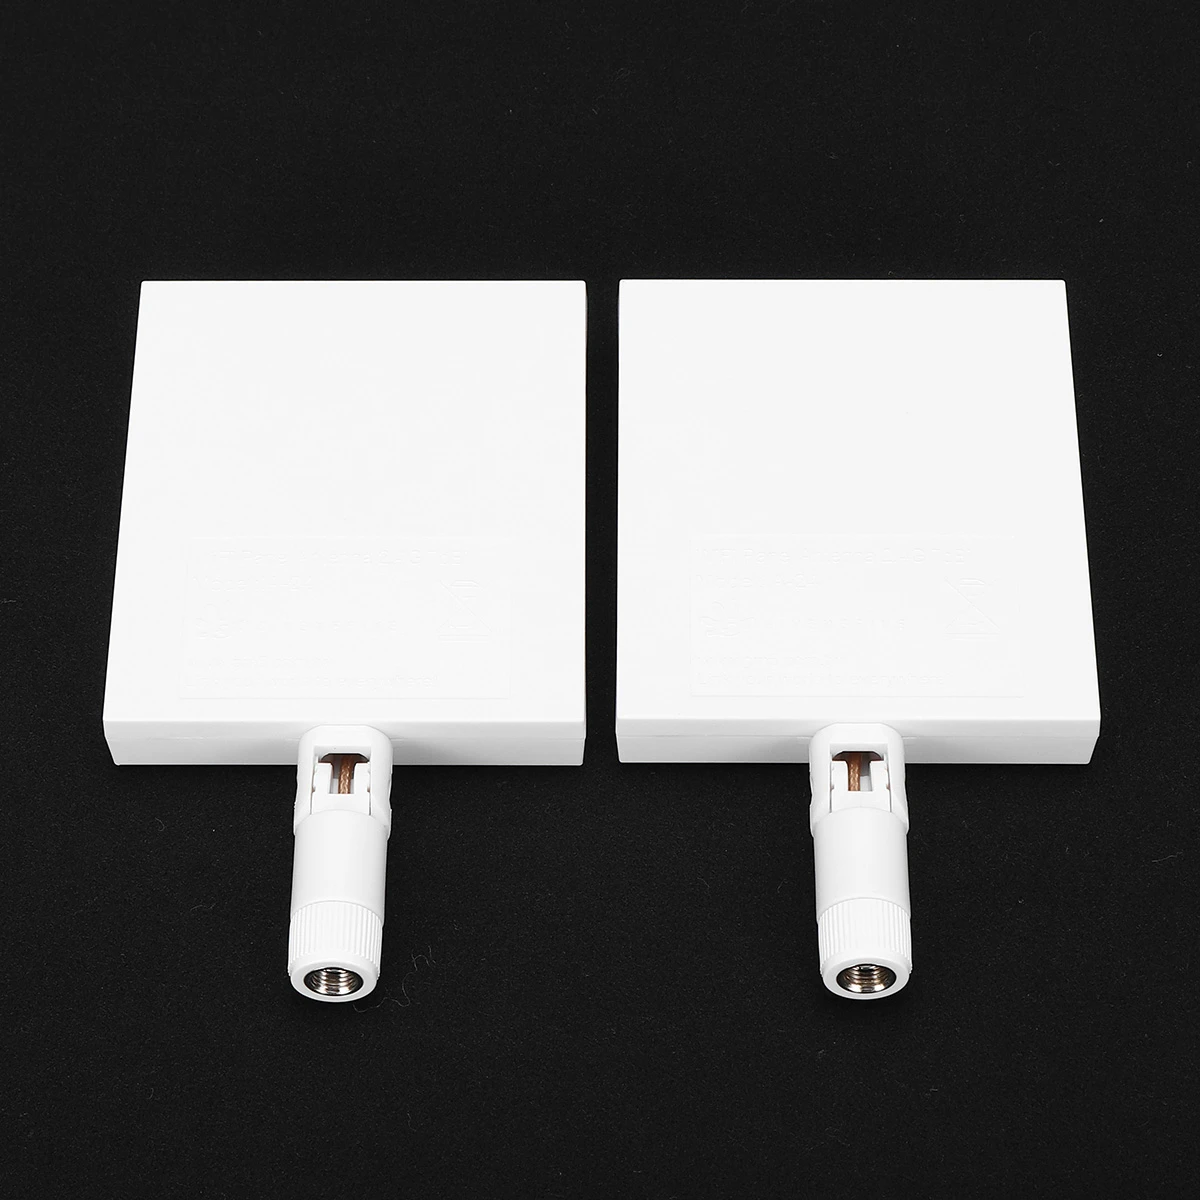 Find DJI Phantom 3 Standard WiFi Signal Range Extender Antenna Router Kit 10dBi Omni for Sale on Gipsybee.com